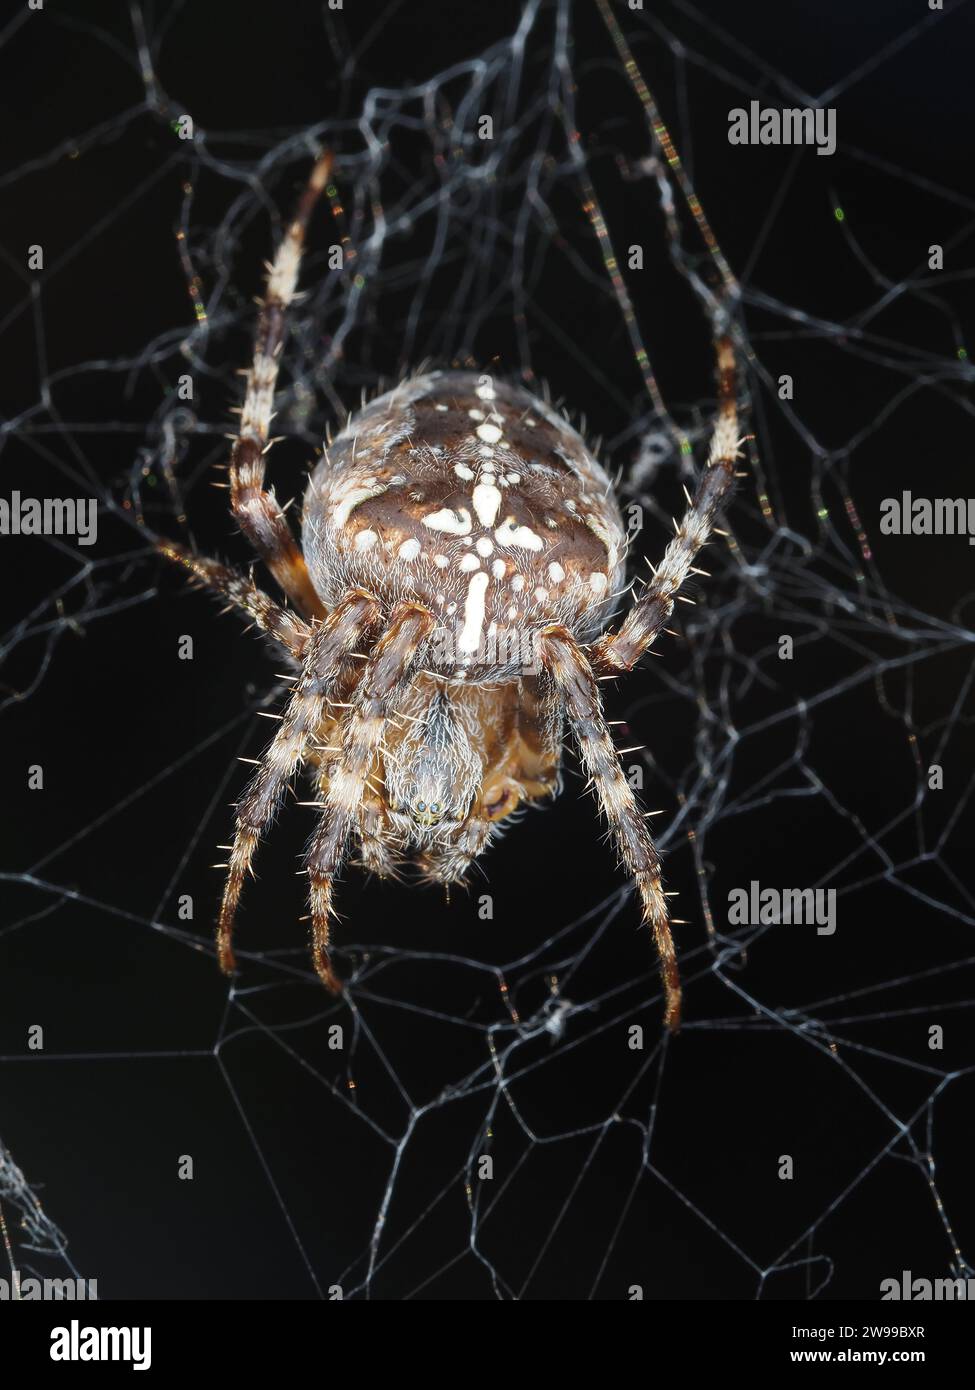 Spider identified as cross orbweaver - Araneus diadematus - seen in Washington state, USA: spider macro photography Stock Photo